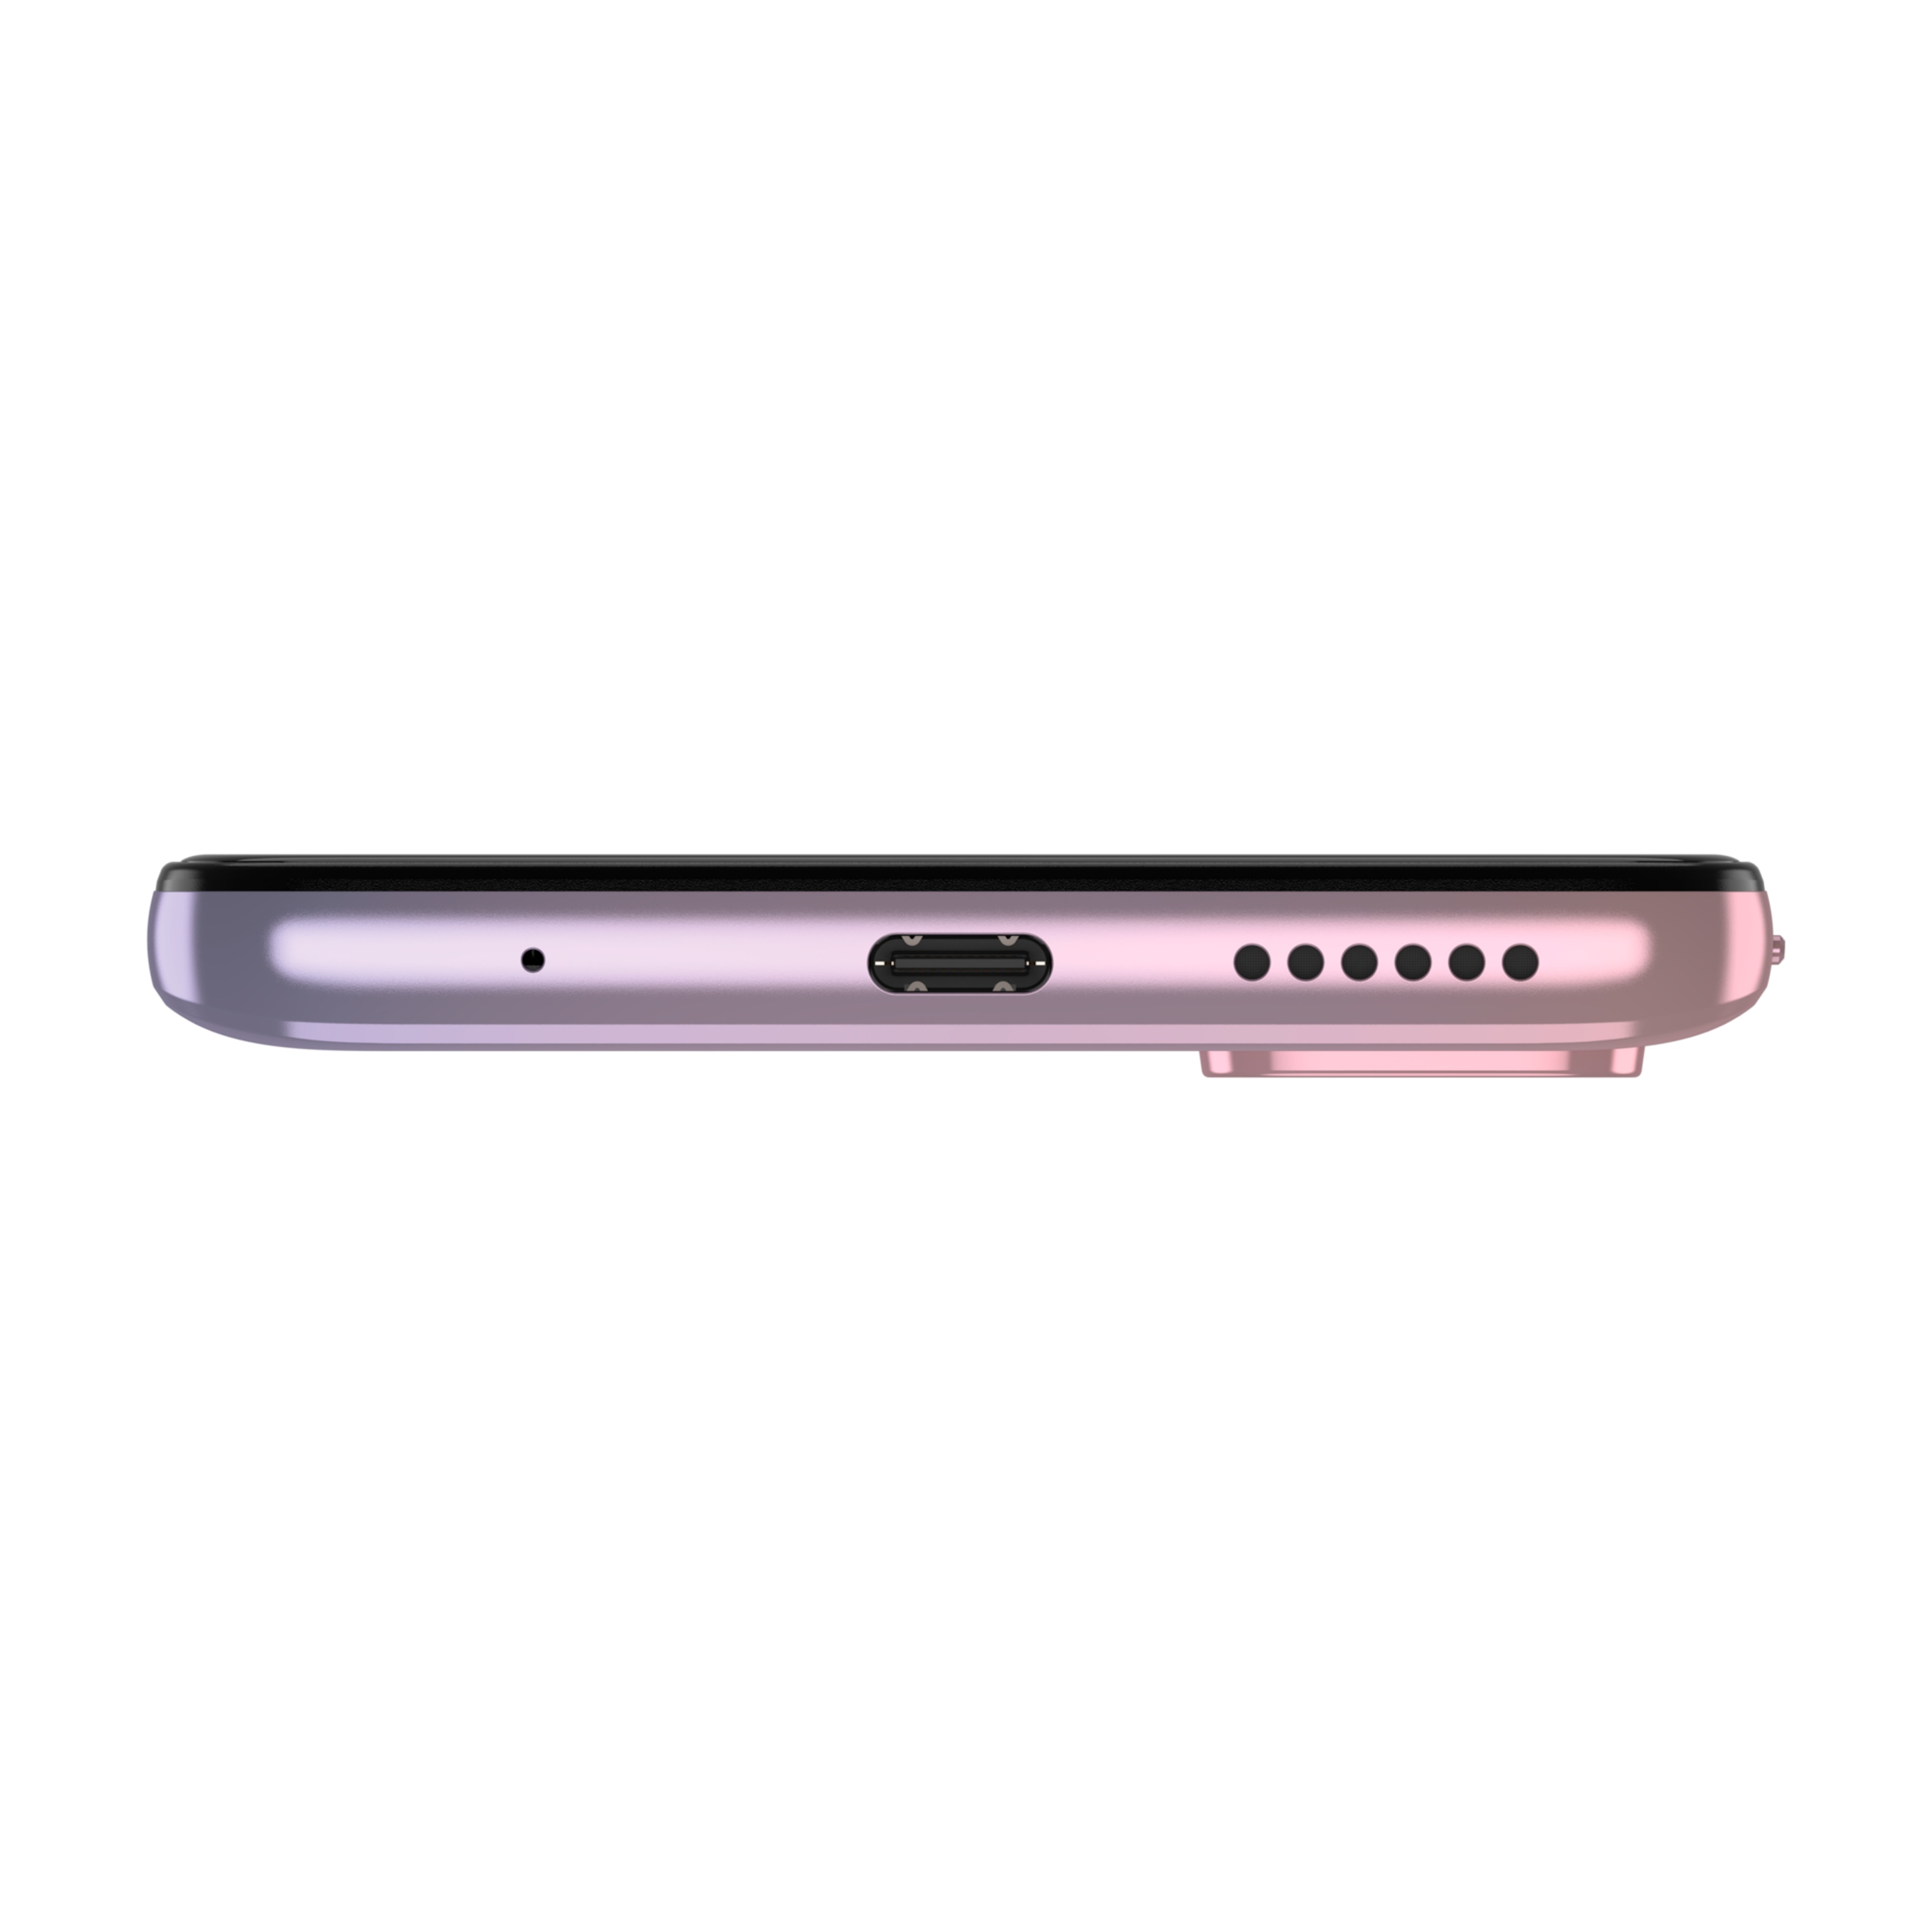 MOTOROLA moto g30 Smartphone, 16,5 cm (6,5 ") HD+ Display, Betriebssystem Android™ 11, 128GB Speicher, 4GB RAM, Qualcomm® Snapdragon™-Prozessor, Farbe: magic violett